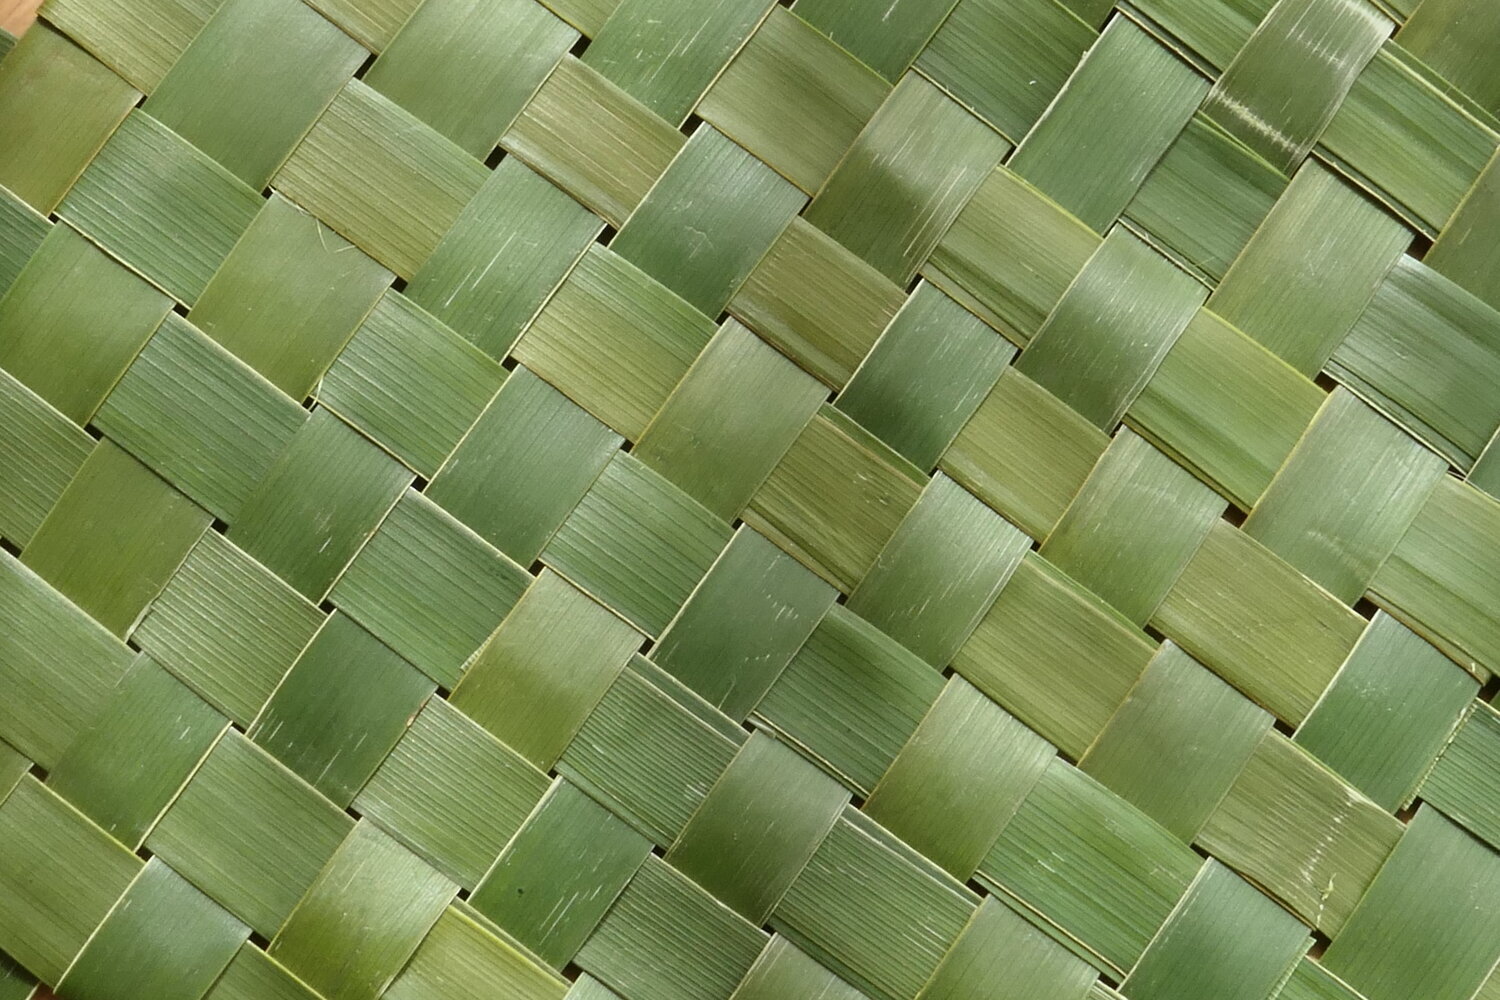 Palm plaiting